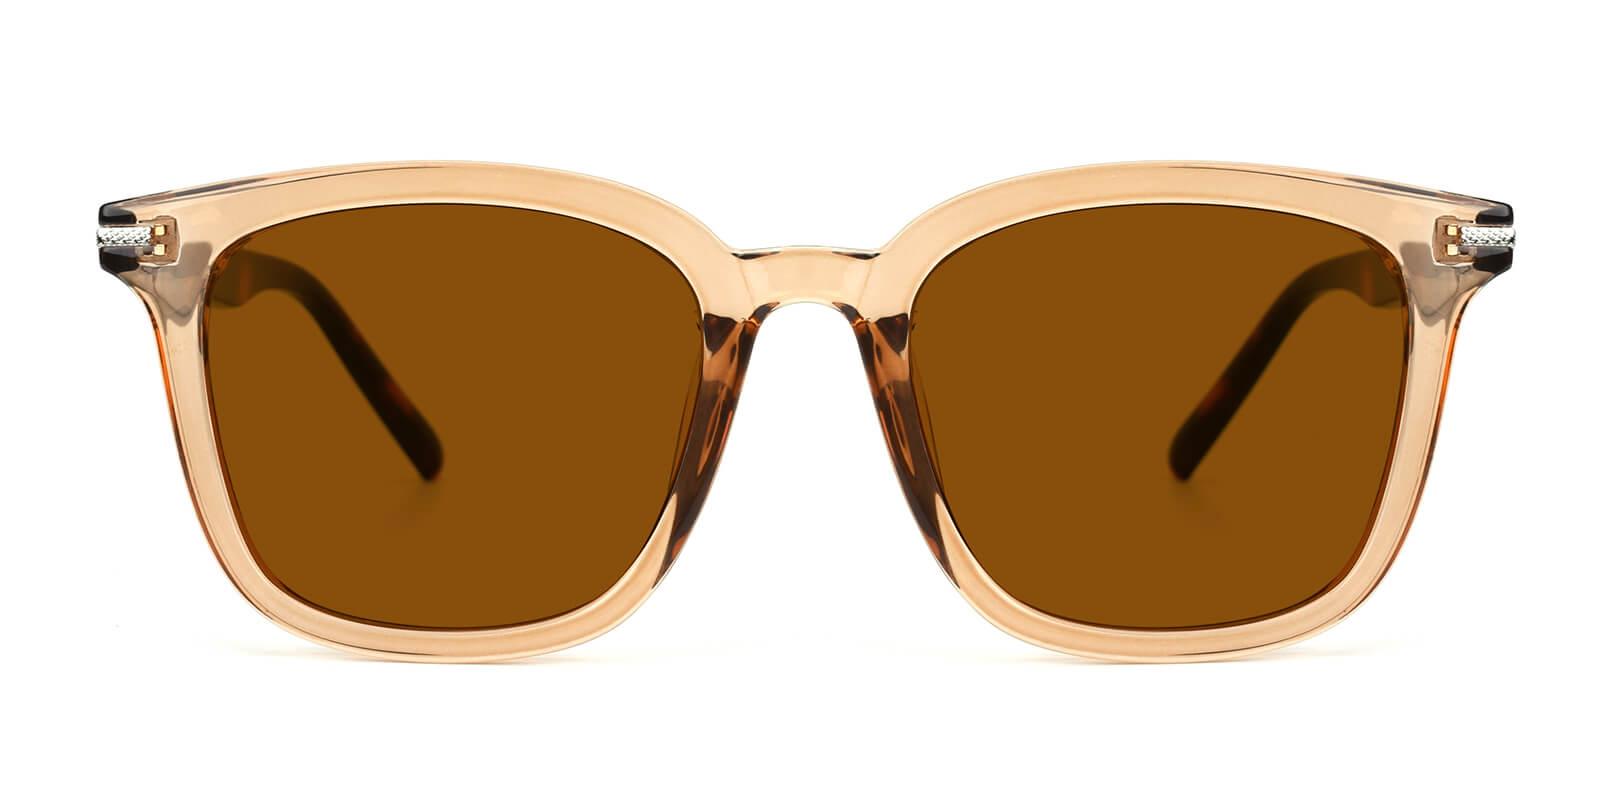 Sherman Sunglasses Prescription Sunglasses Online